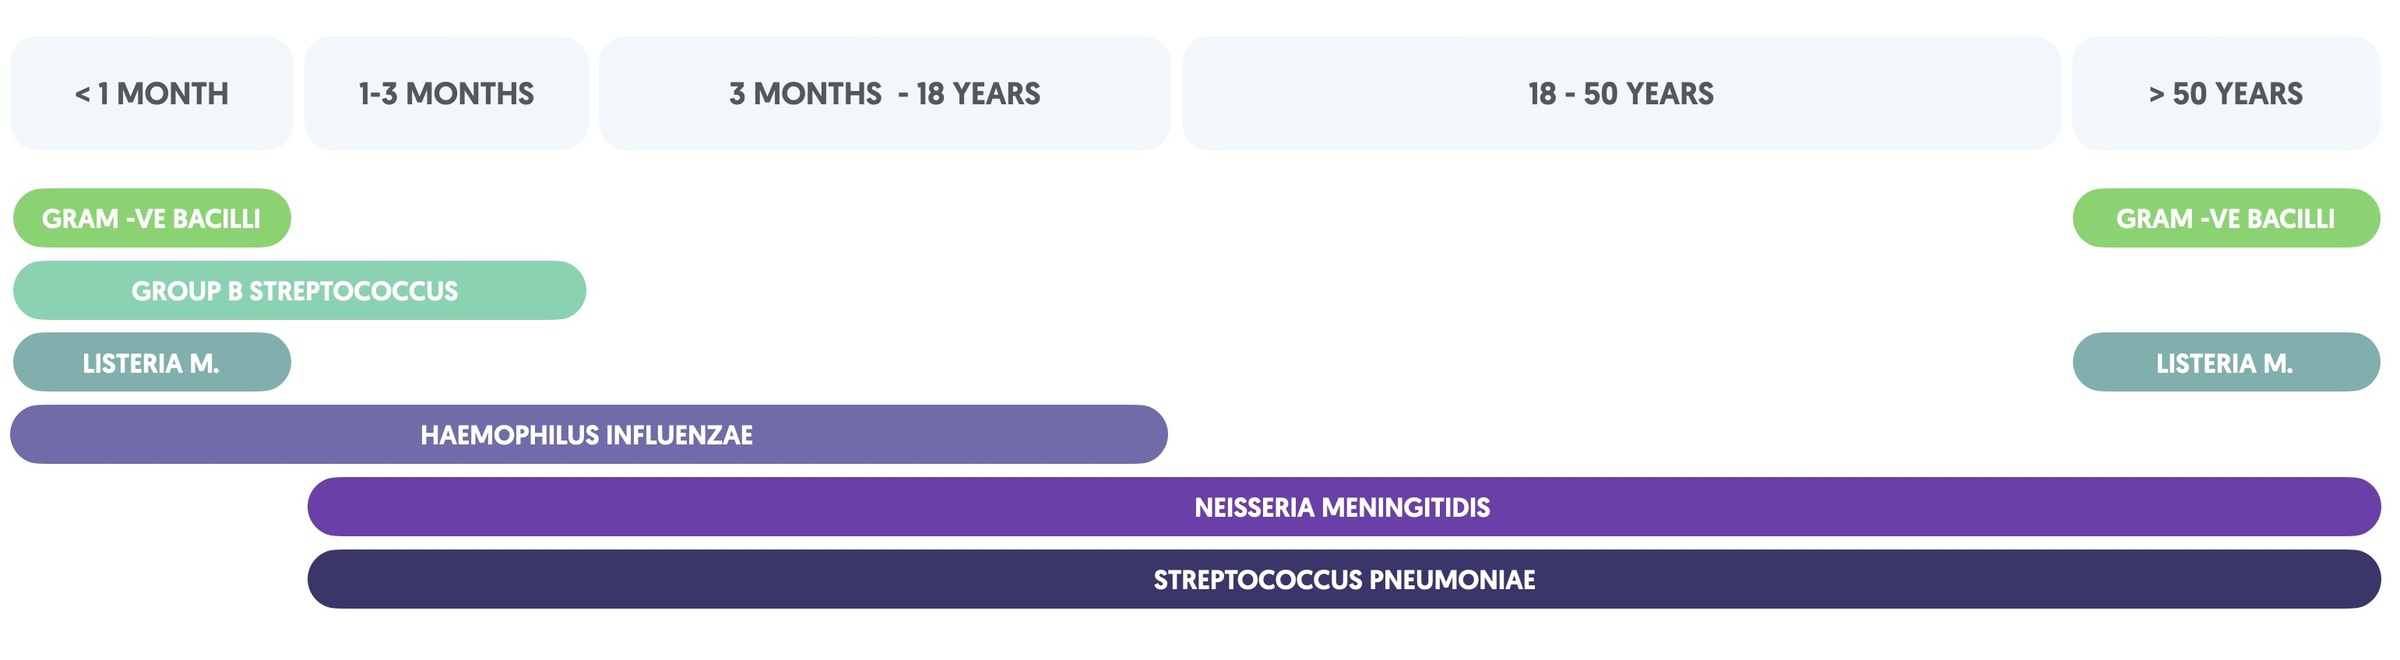 Aetiology of meningitis